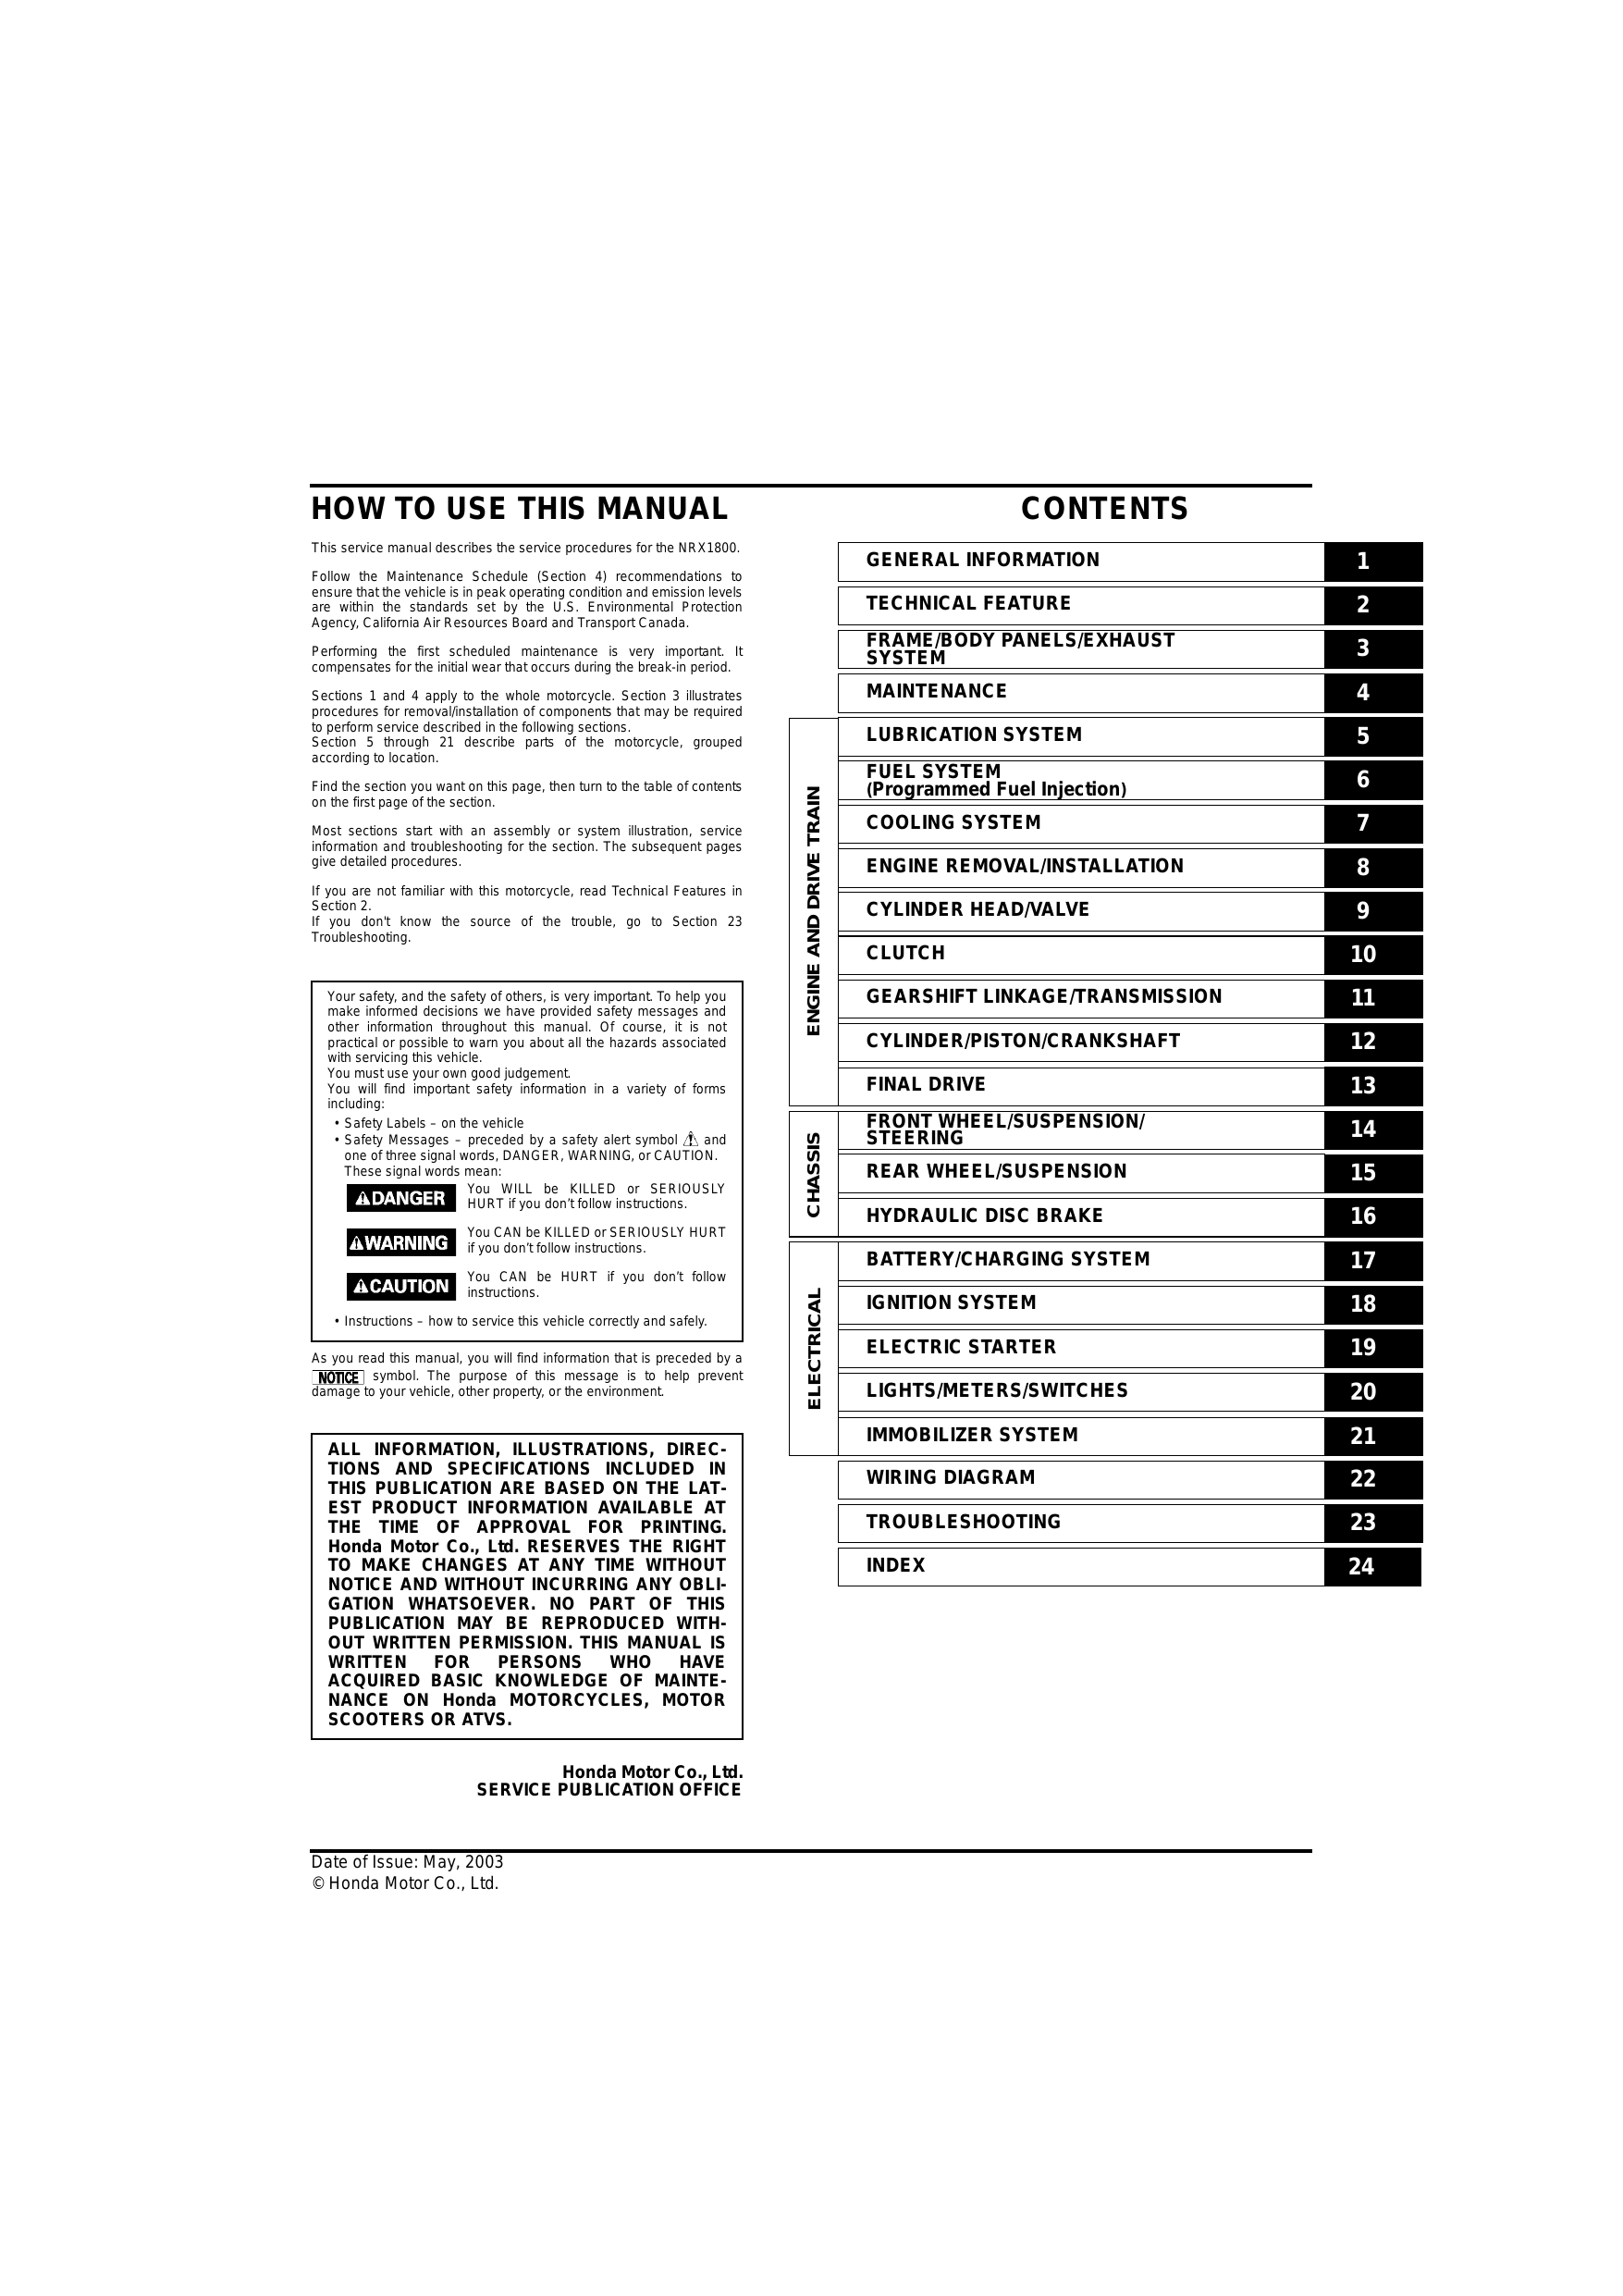 2004 Honda NRX 1800 Valkyrie Rune repair and service manual Preview image 2